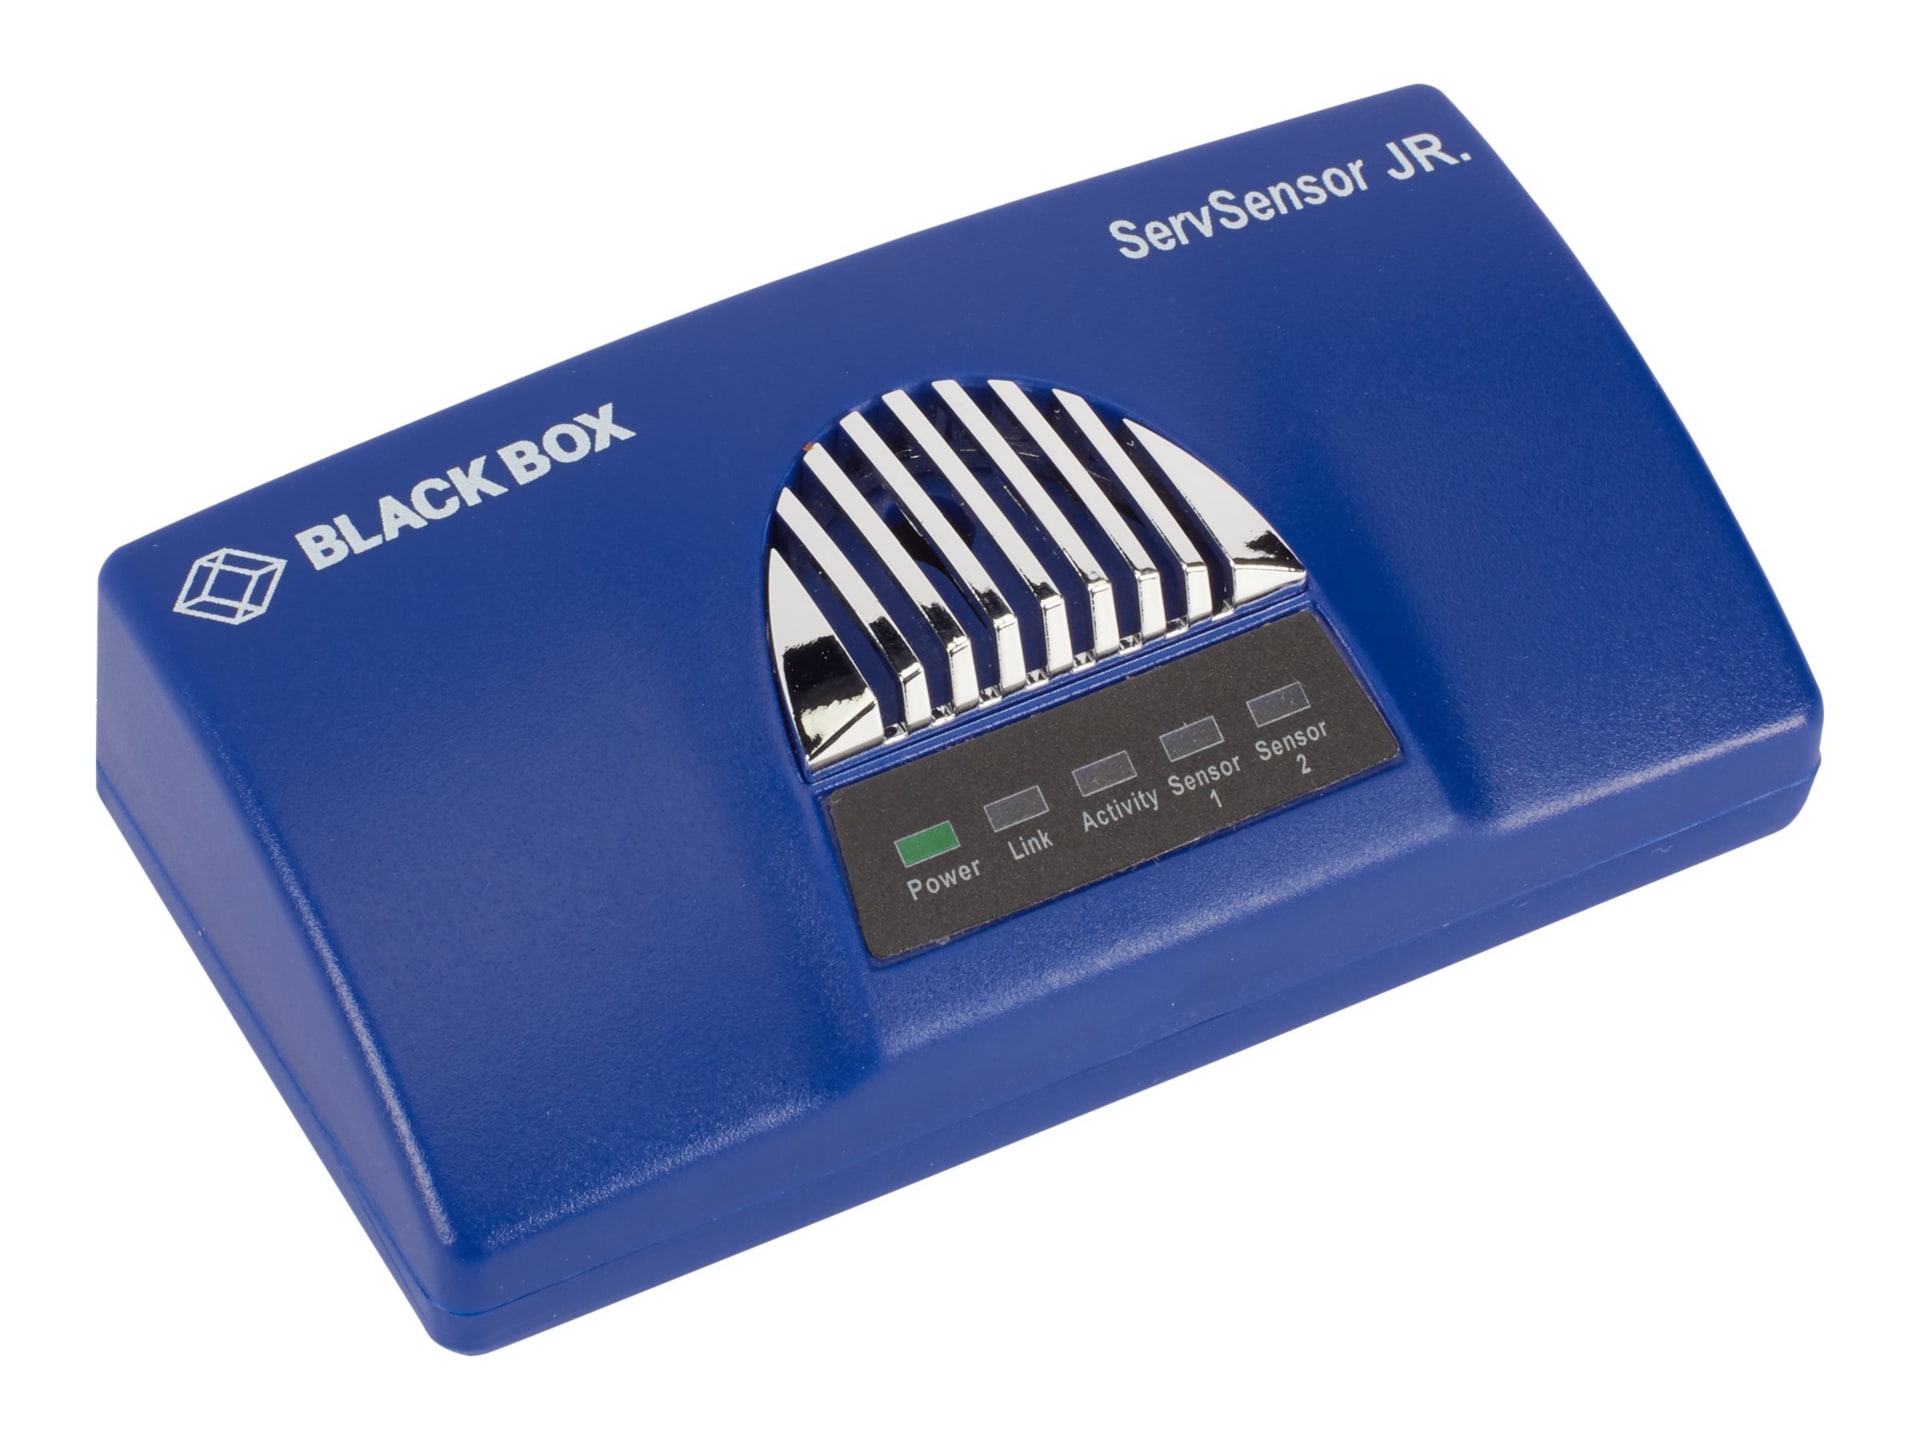 Black Box AlertWerks ServSensor Jr. - environment monitoring device